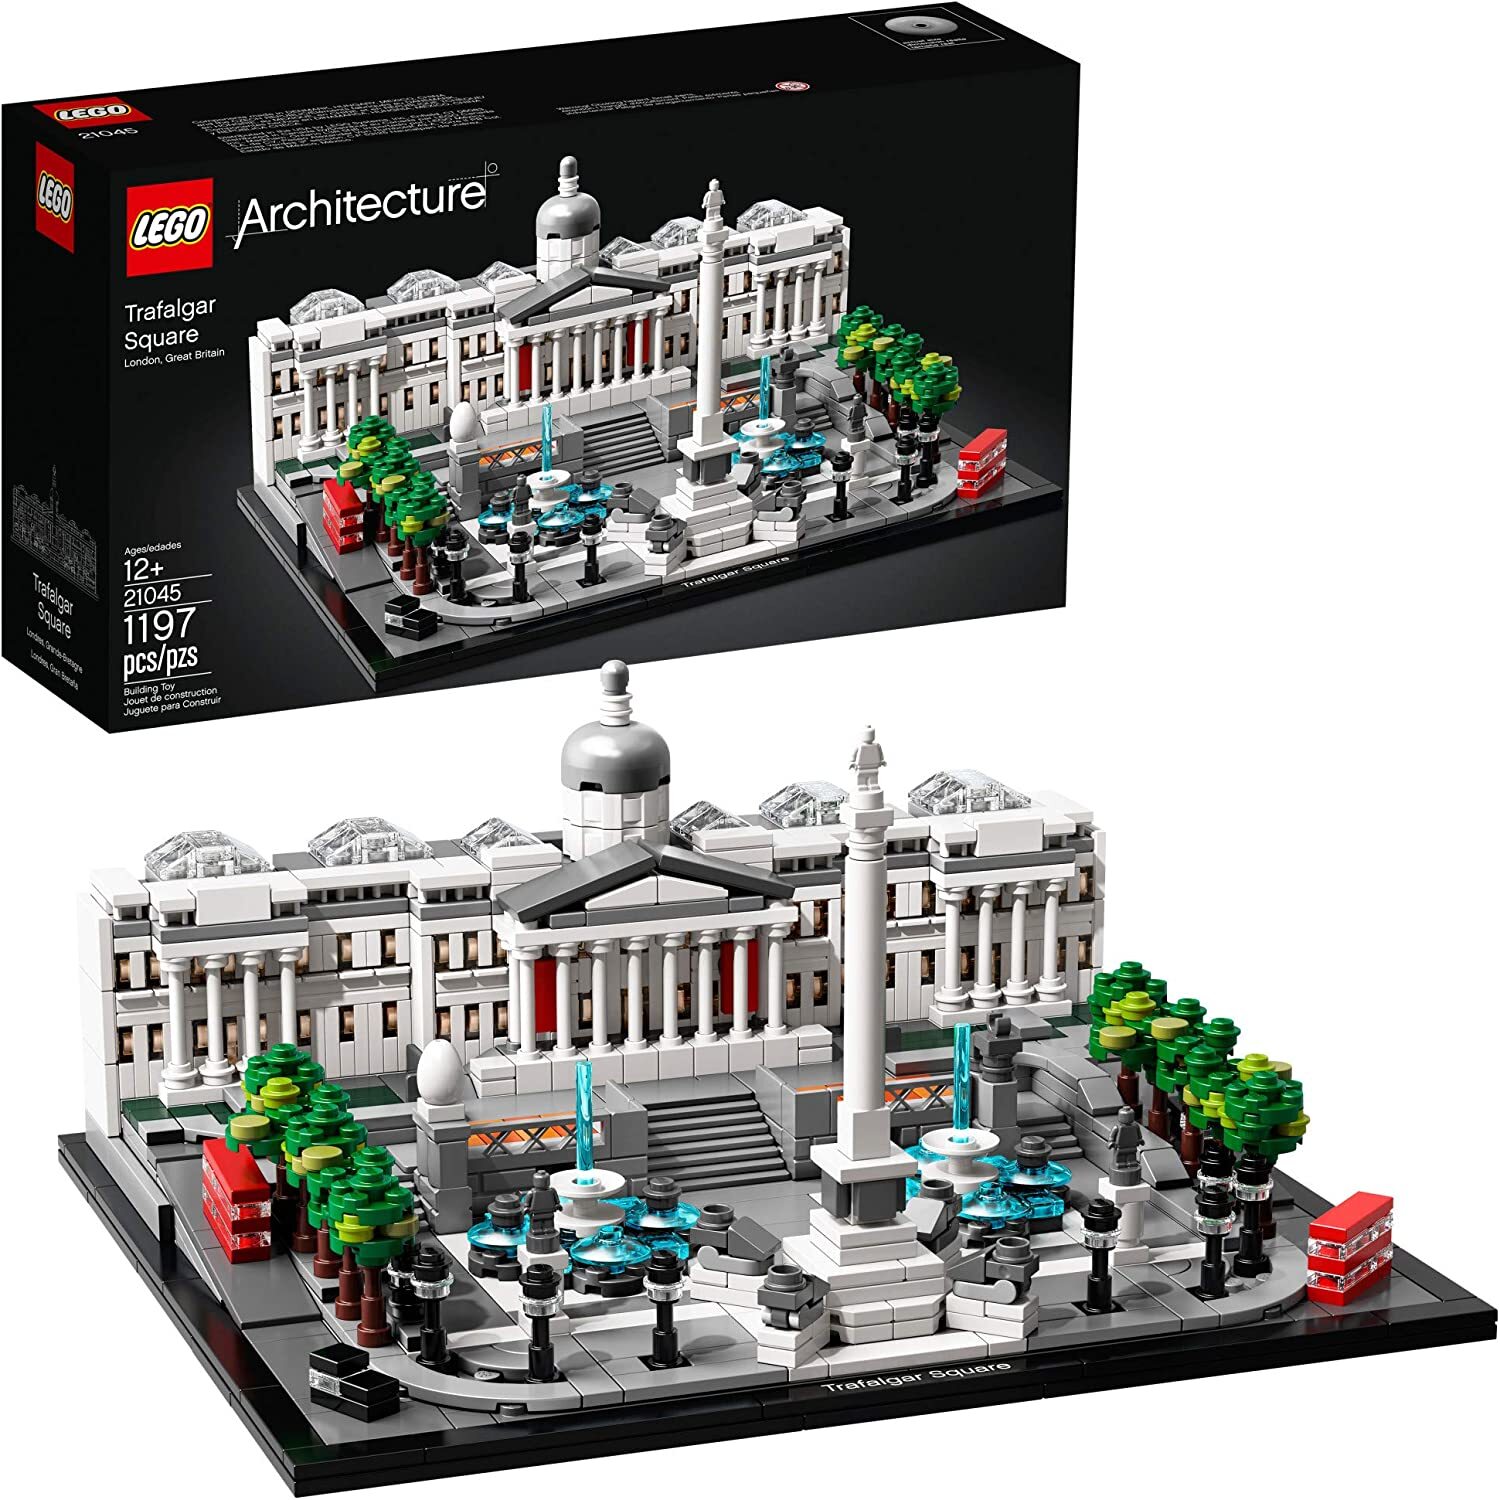 Đồ chơi lắp ráp Lego Architecture 21045 - Quảng Trường Trafalgar